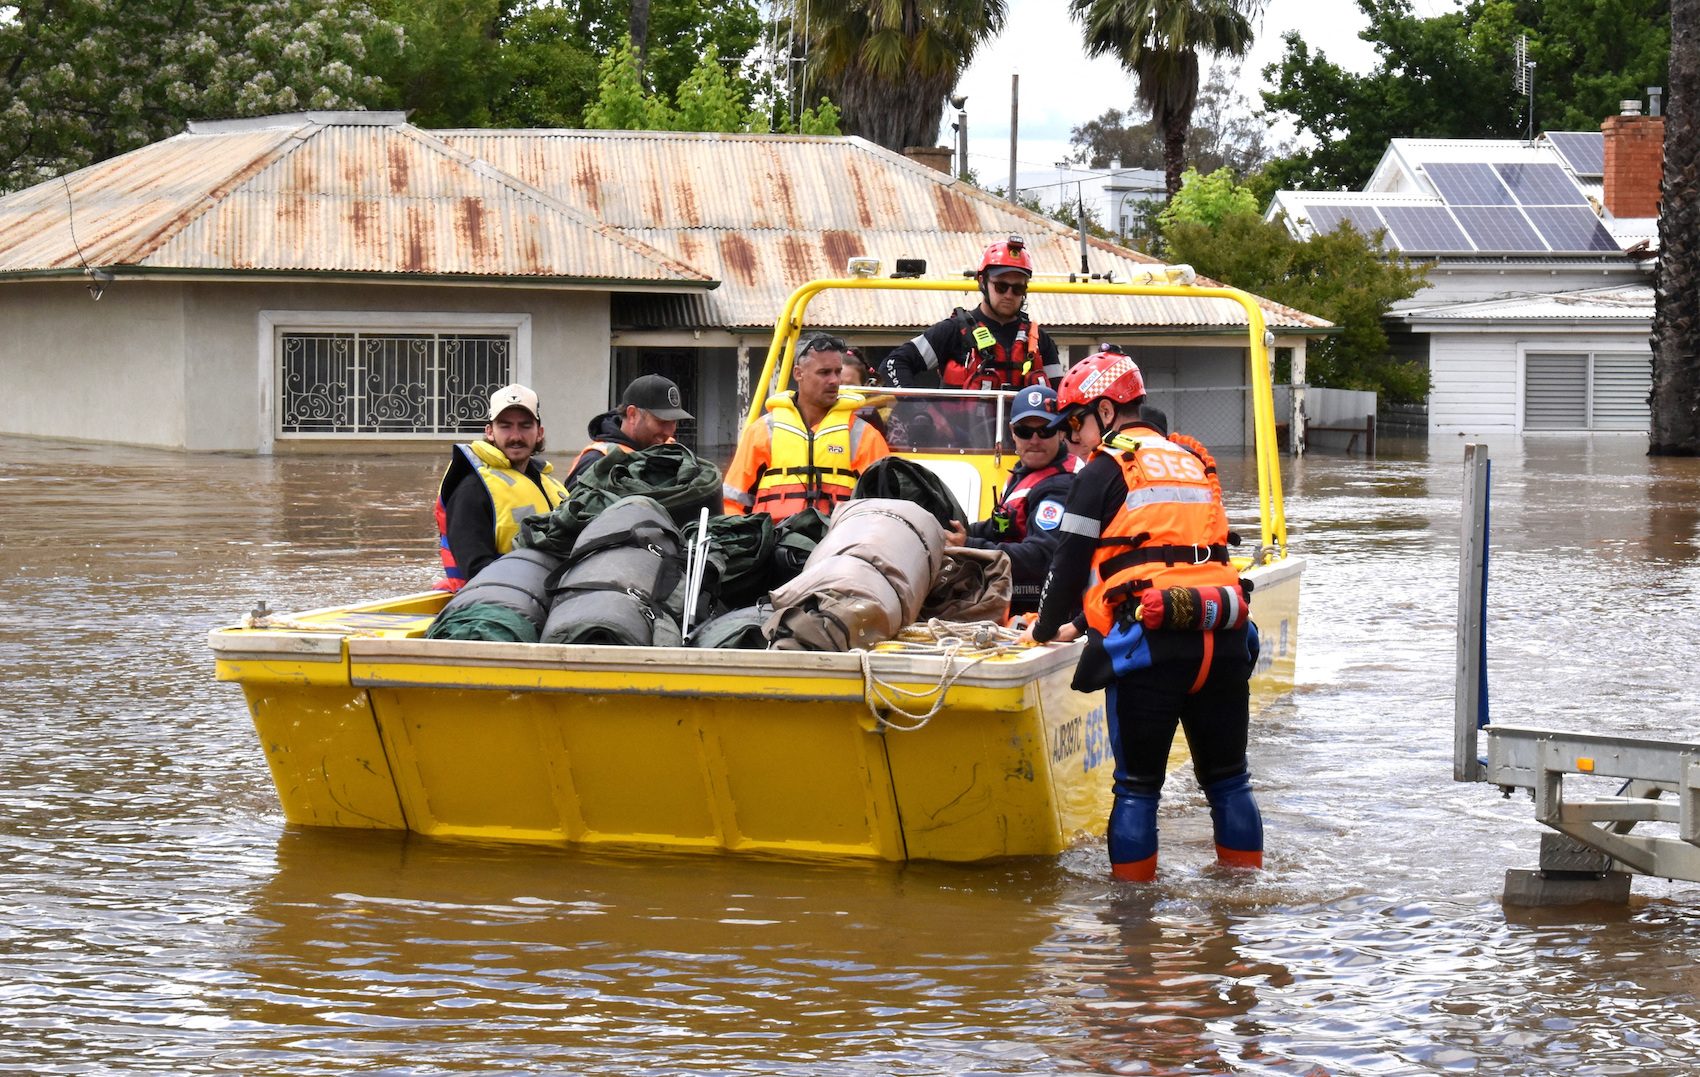 Australia battles floods as frustration swells over relief, warnings